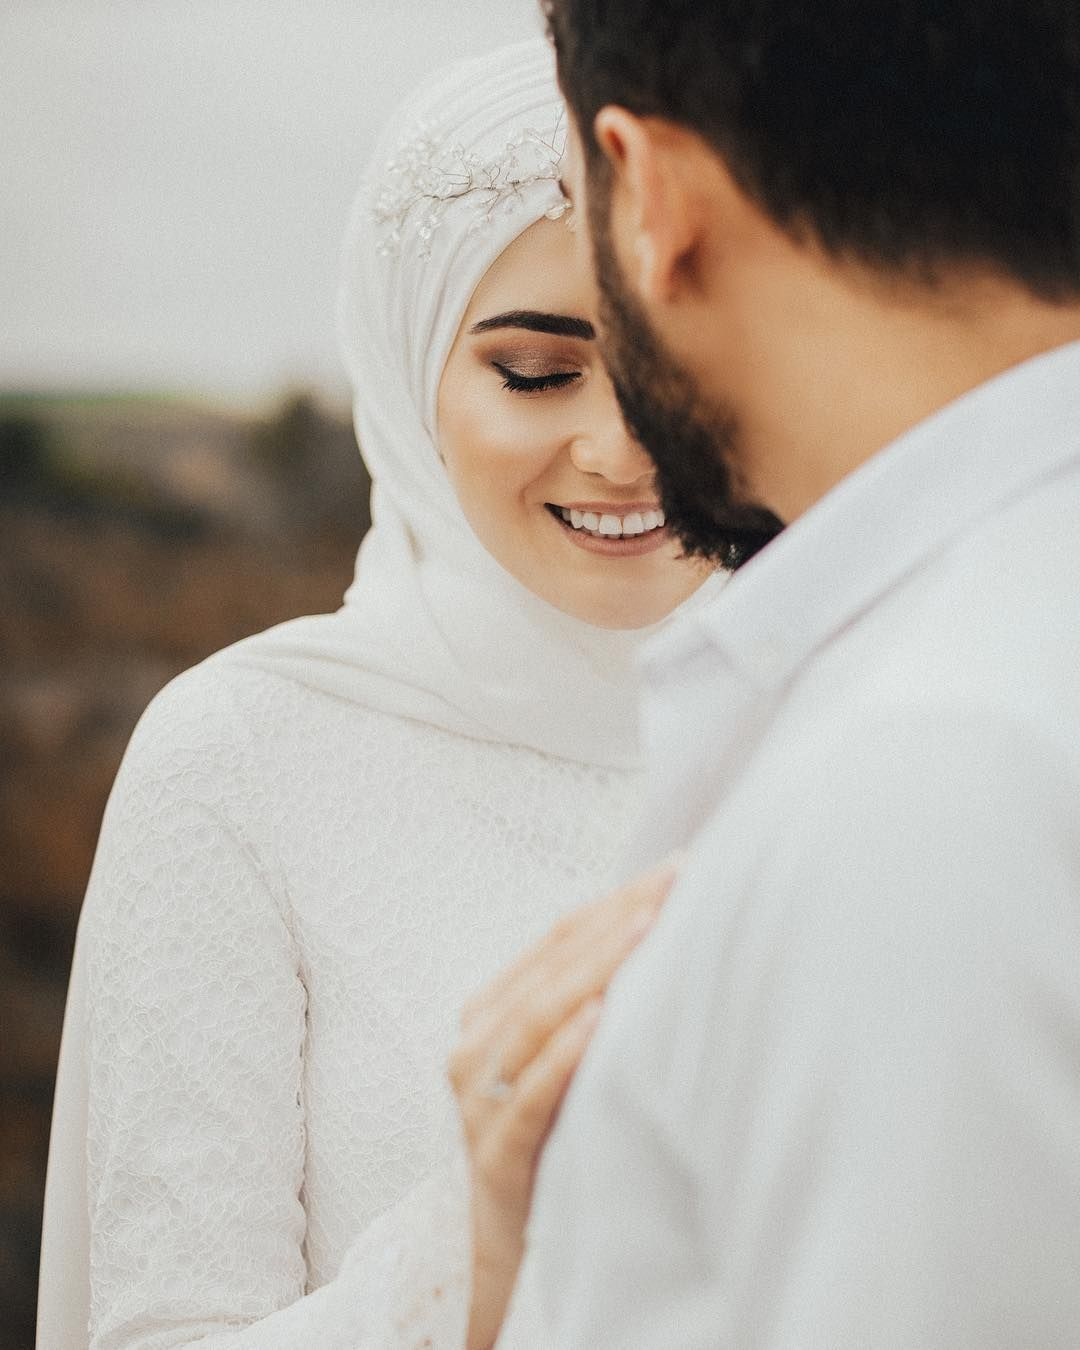 Muslim Couple | Muslim Husband | Muslim Wife | Love Couple